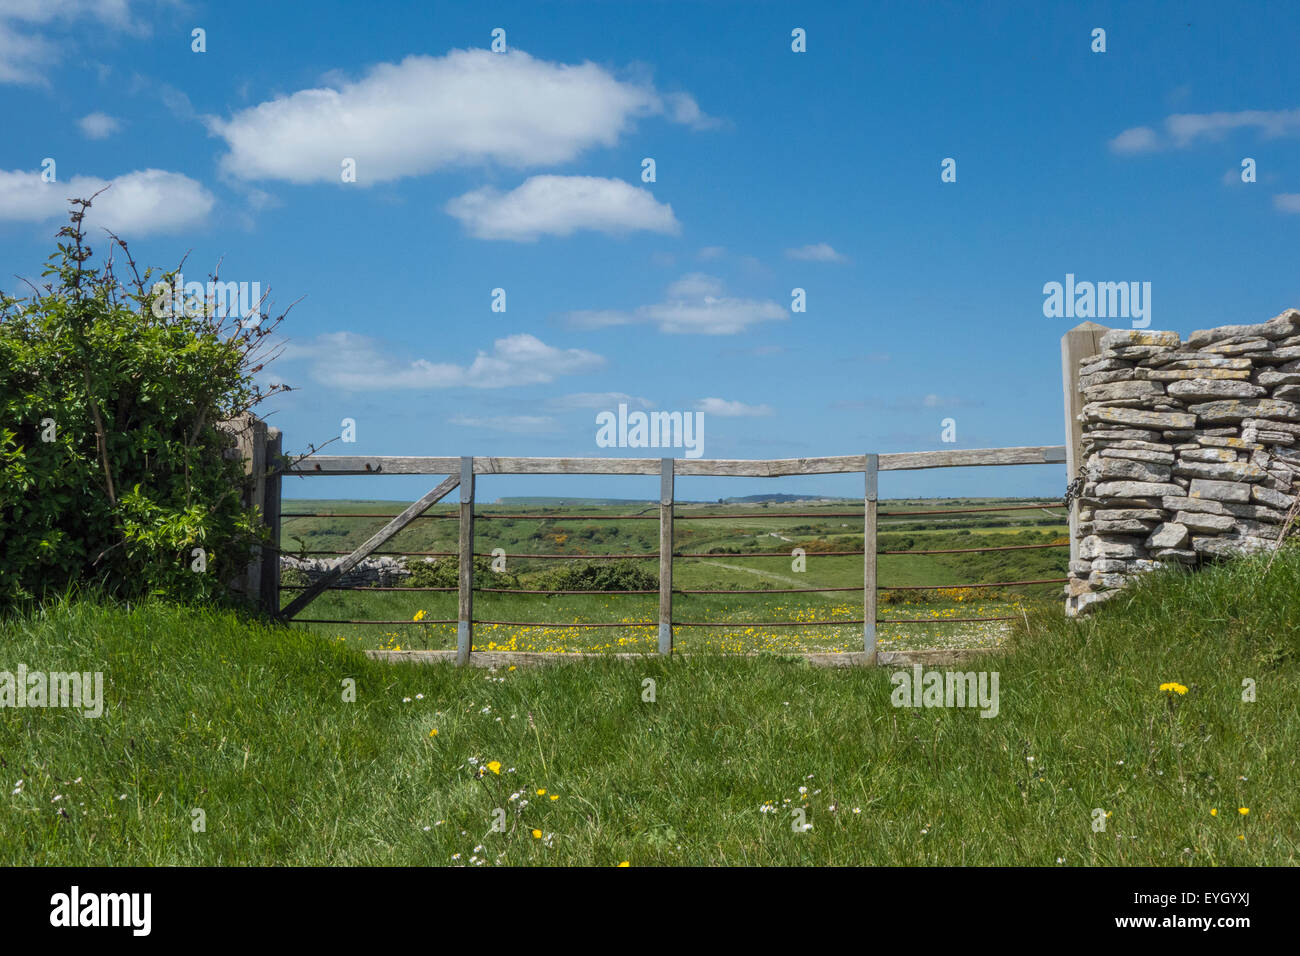 Gate way with Dorset Gate and Dorset coastline in background, near Dancing Ledge, Dorset, England Stock Photo